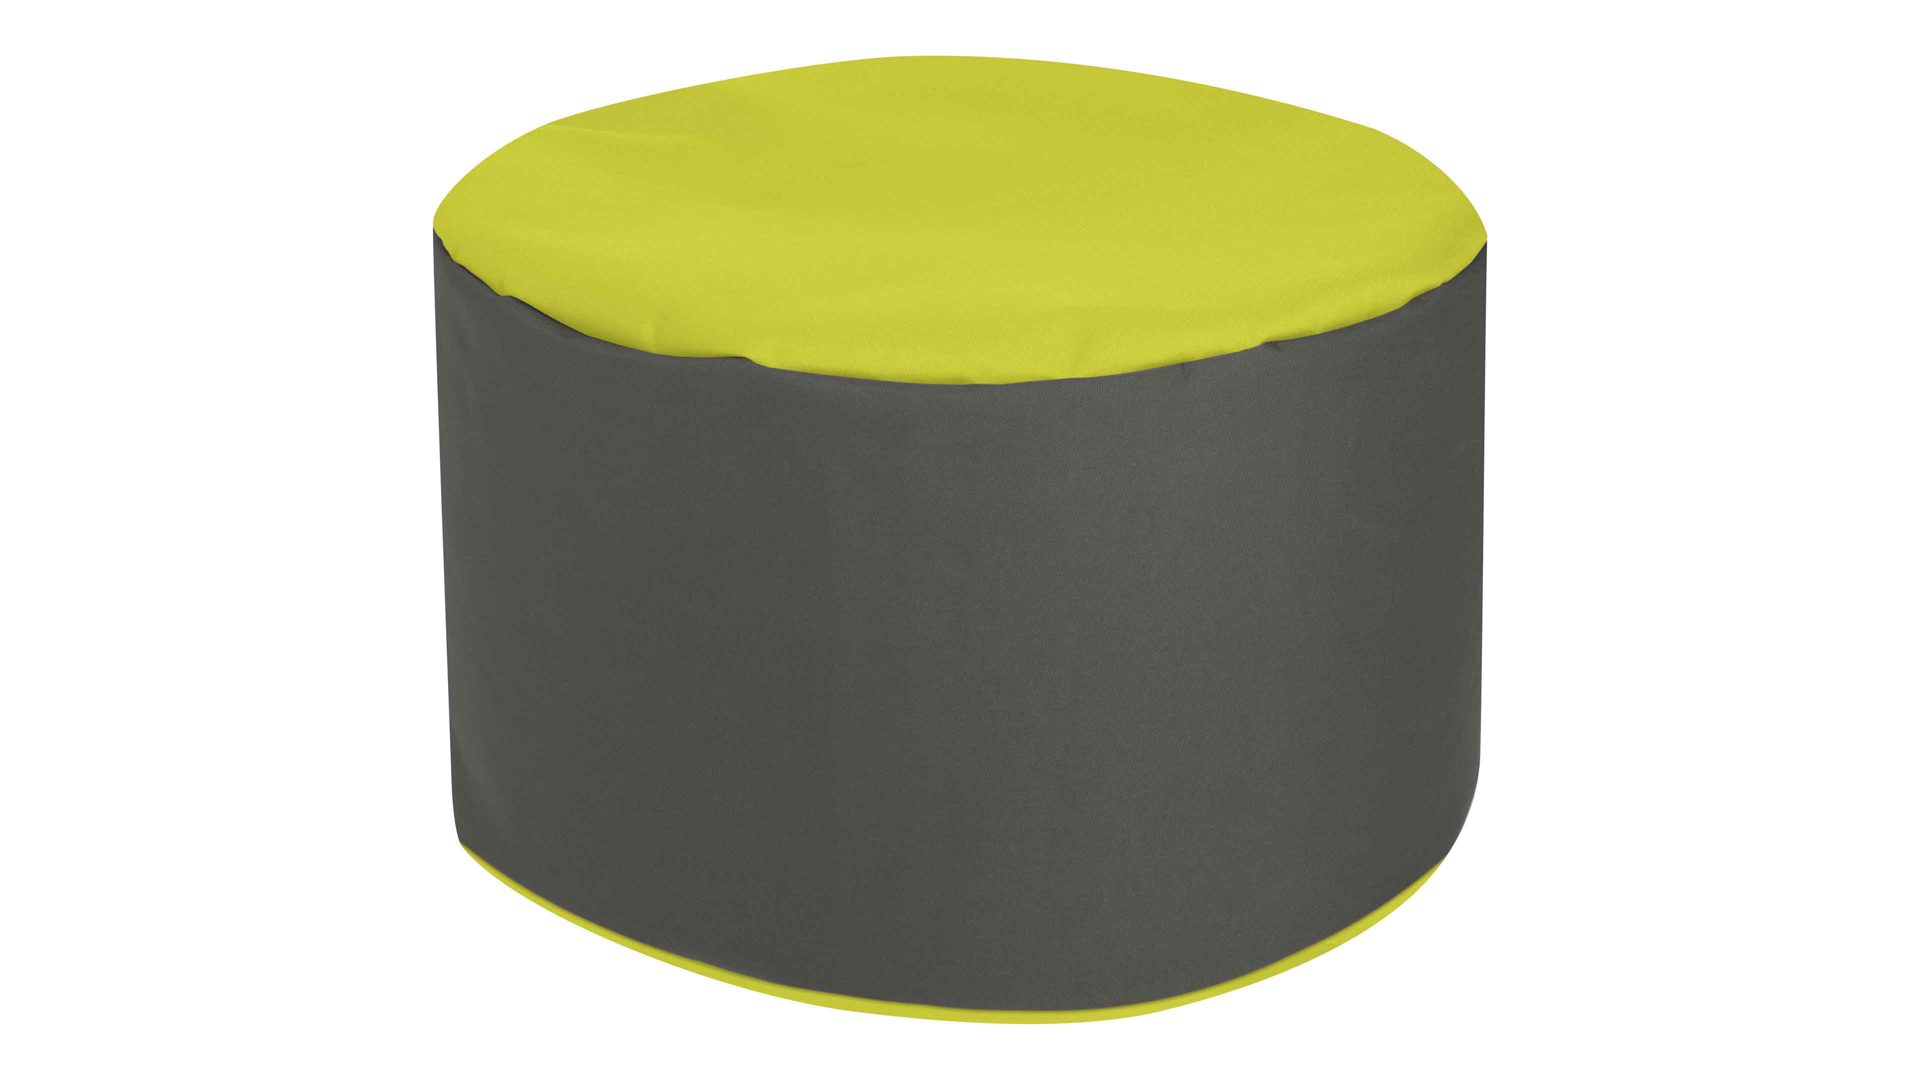 Sitzsack-Hocker Magma sitting point aus Kunstfaser in Grün SITTING POINT Sitzsack-Hocker dotcom bebop scuba® Grün & Anthrazit - Durchmesser ca. 50 cm